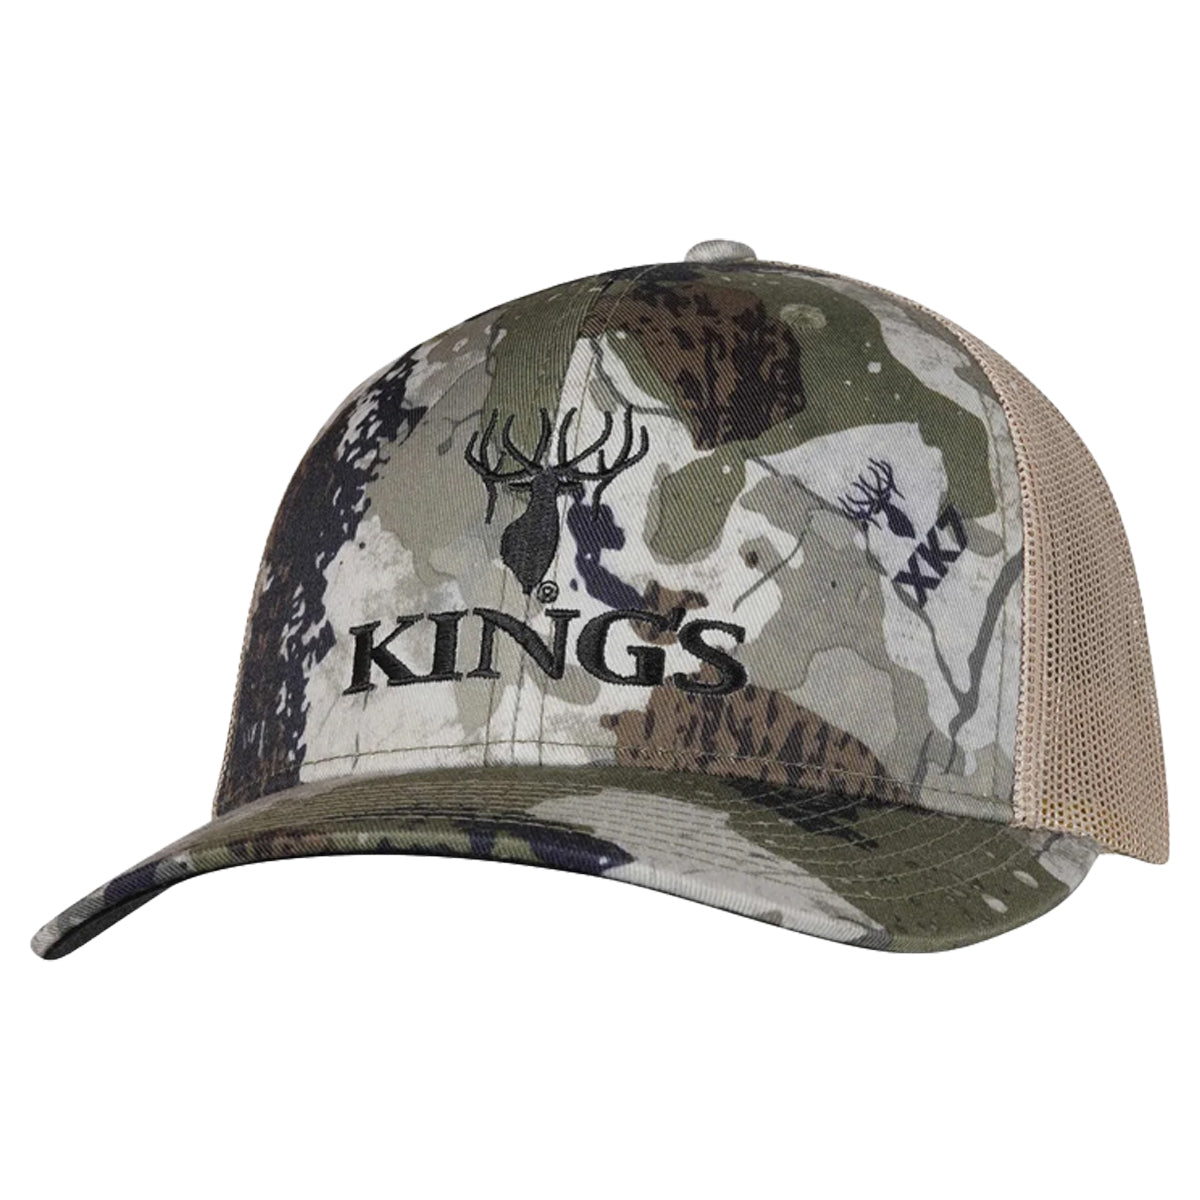 King's Trucker Hat in  by GOHUNT | King's - GOHUNT Shop